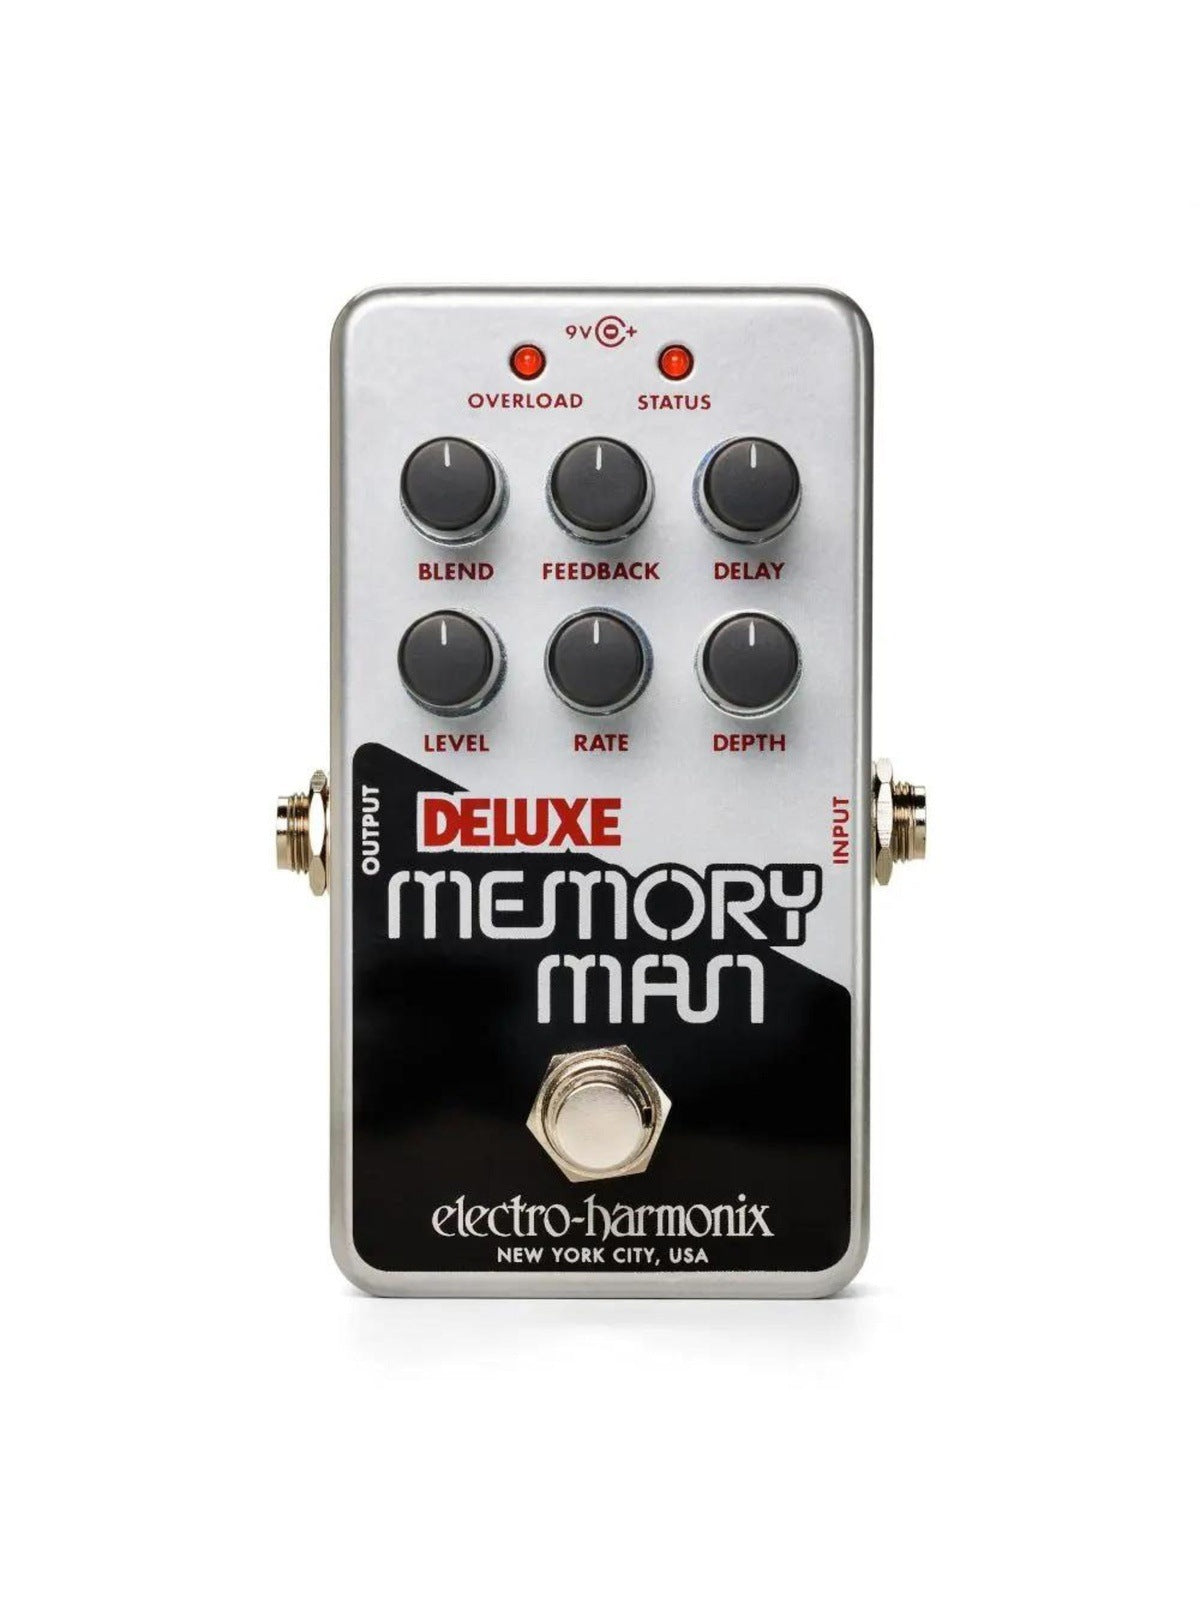 Electro Harmonix Nano Deluxe Memory Man Analog Delay / Chorus / Vibrato Pedal